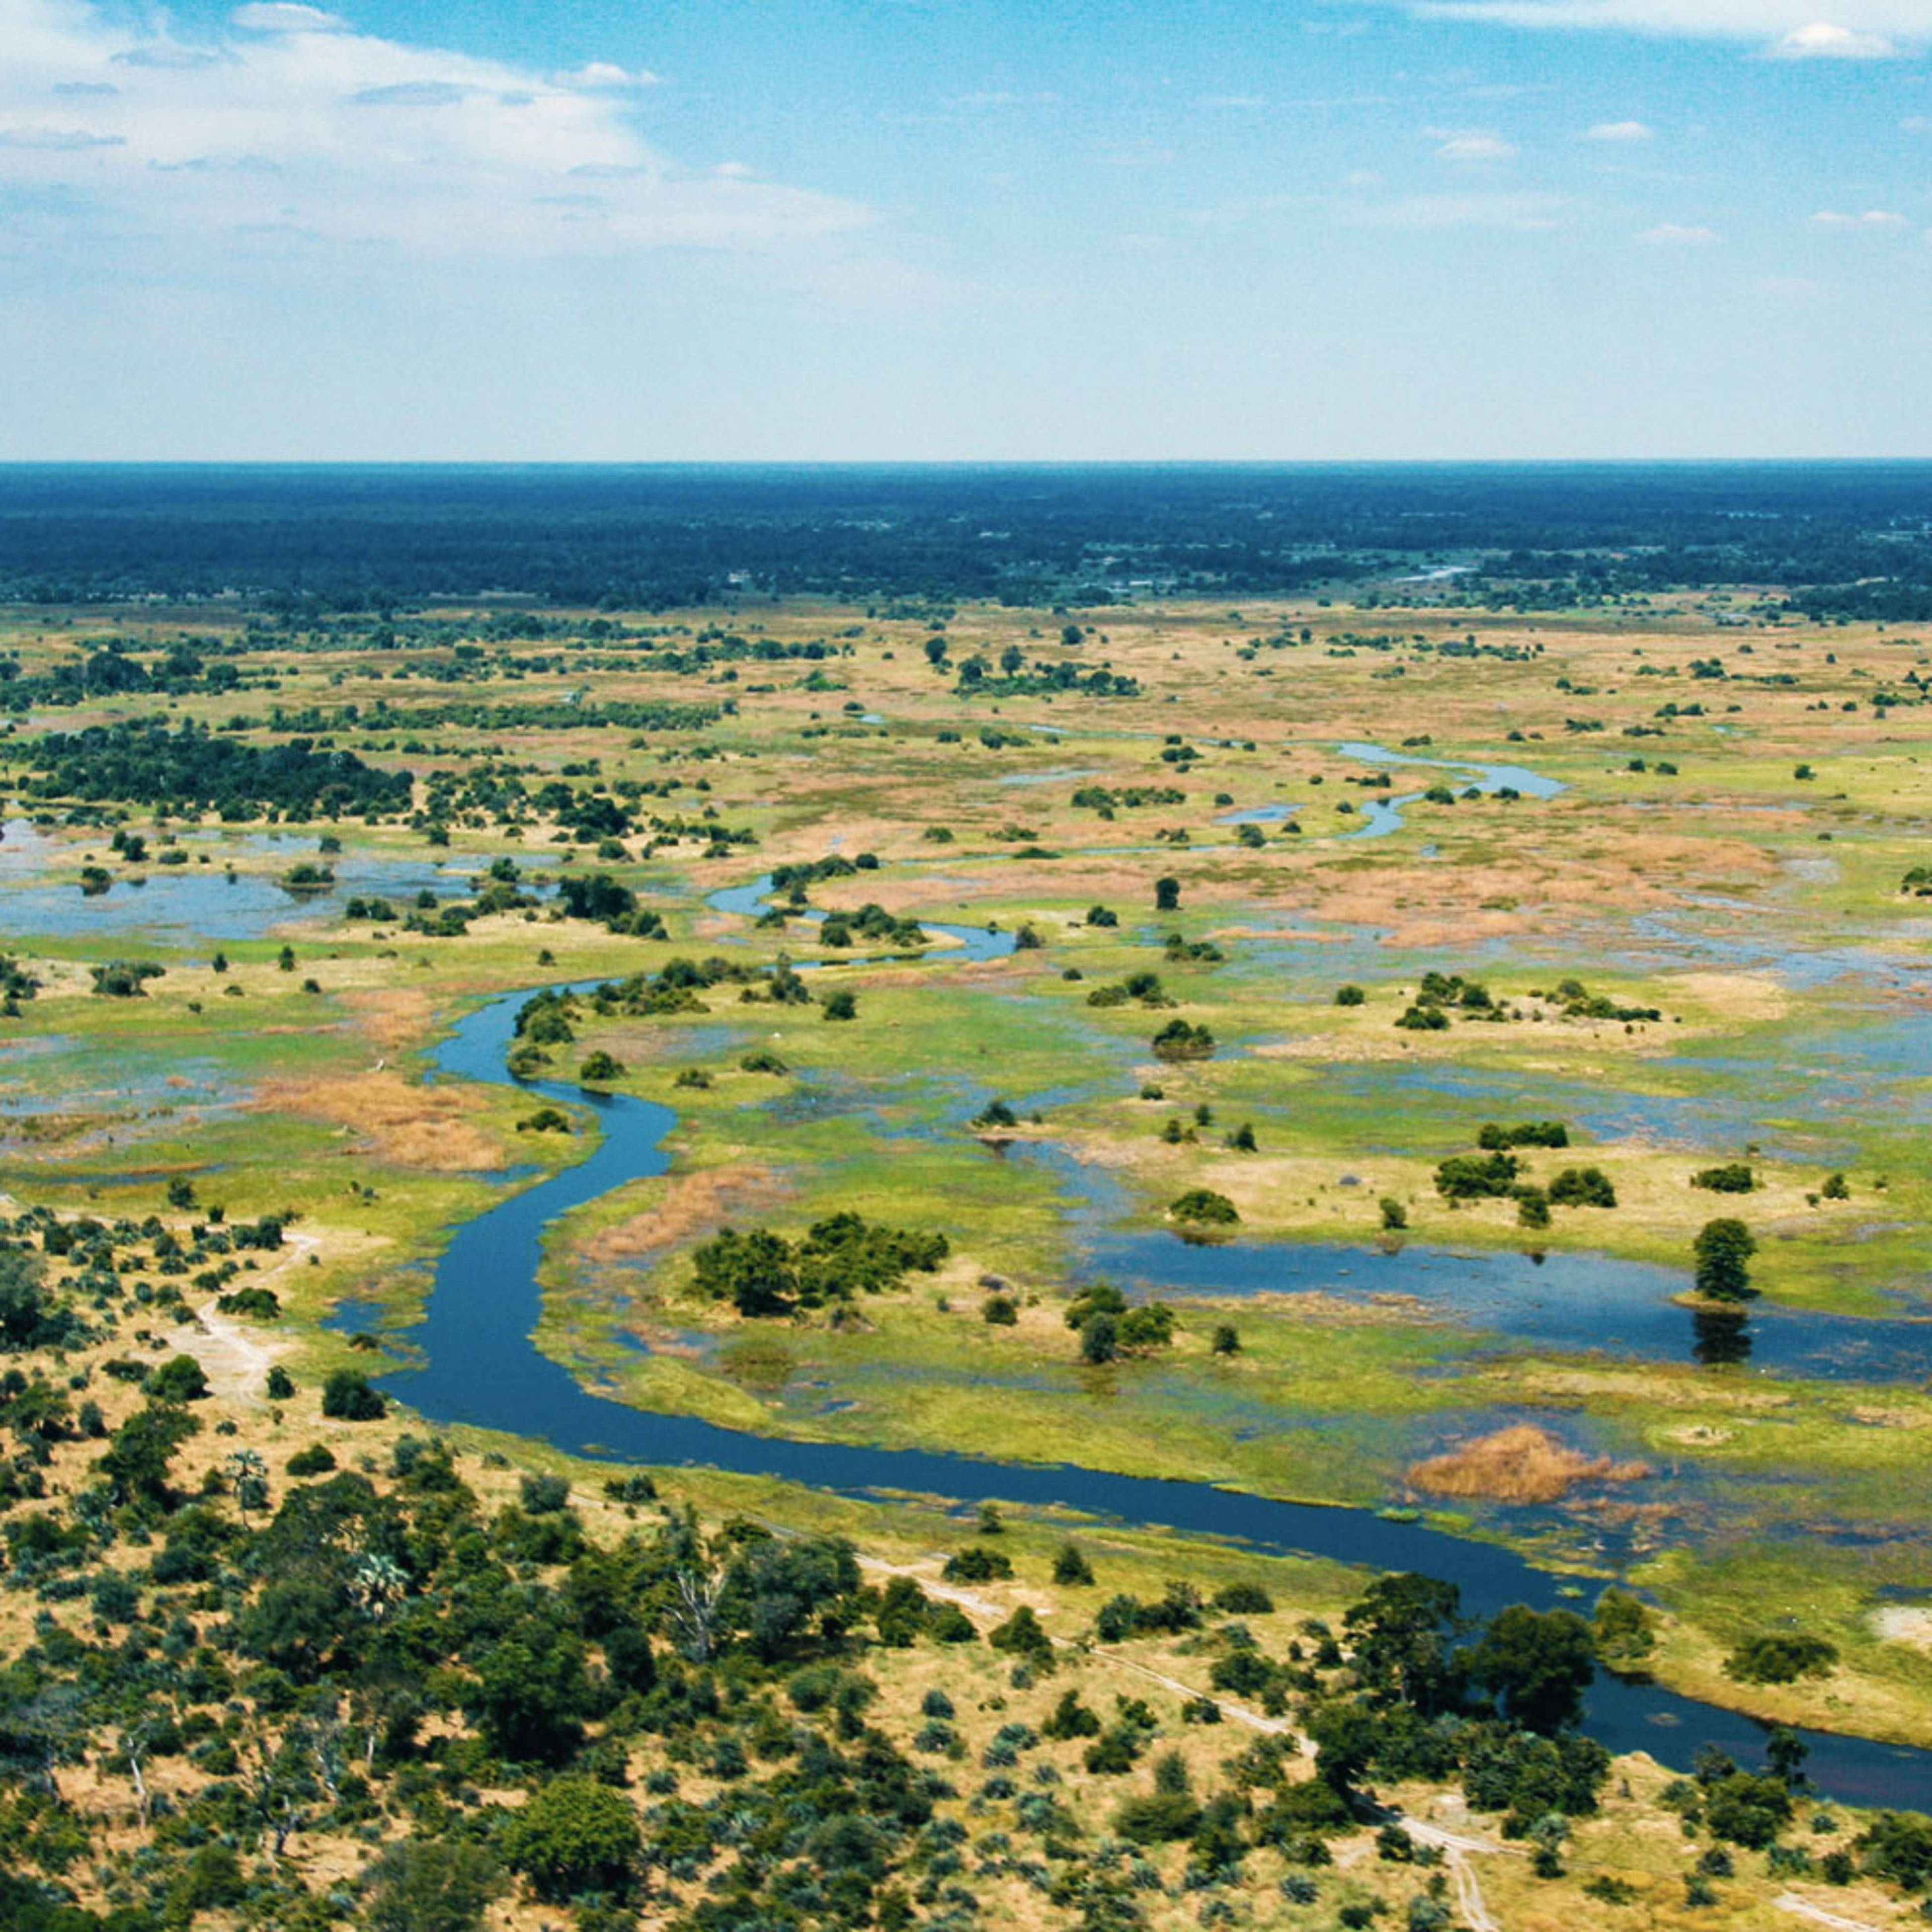 Individuelle Natur Reisen Botswana - Reise jetzt individuell gestalten